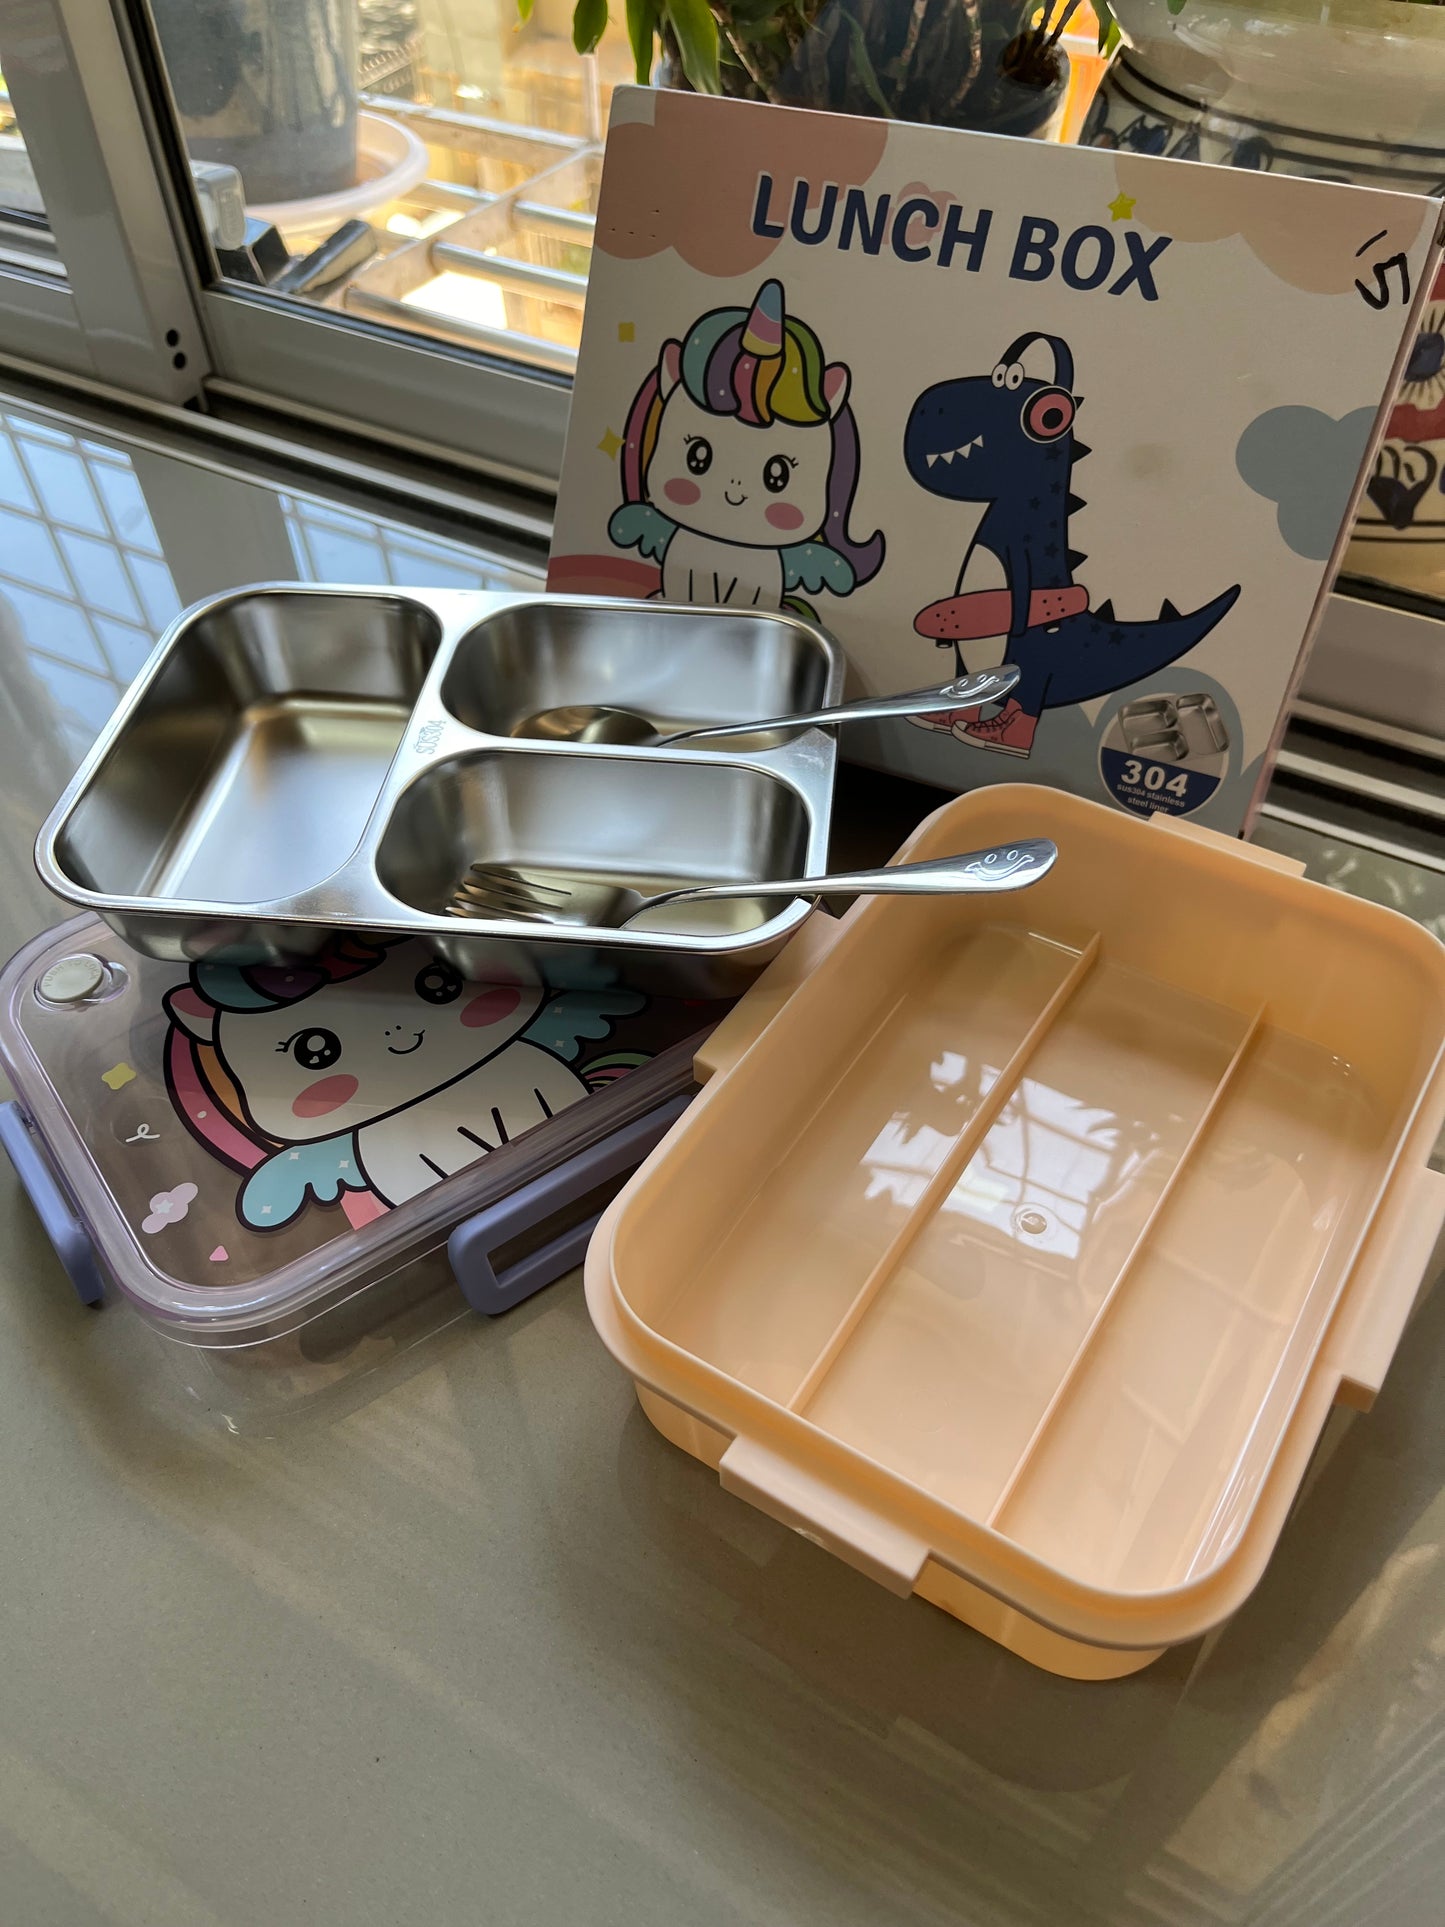 Unicorn Bento Lunch Box